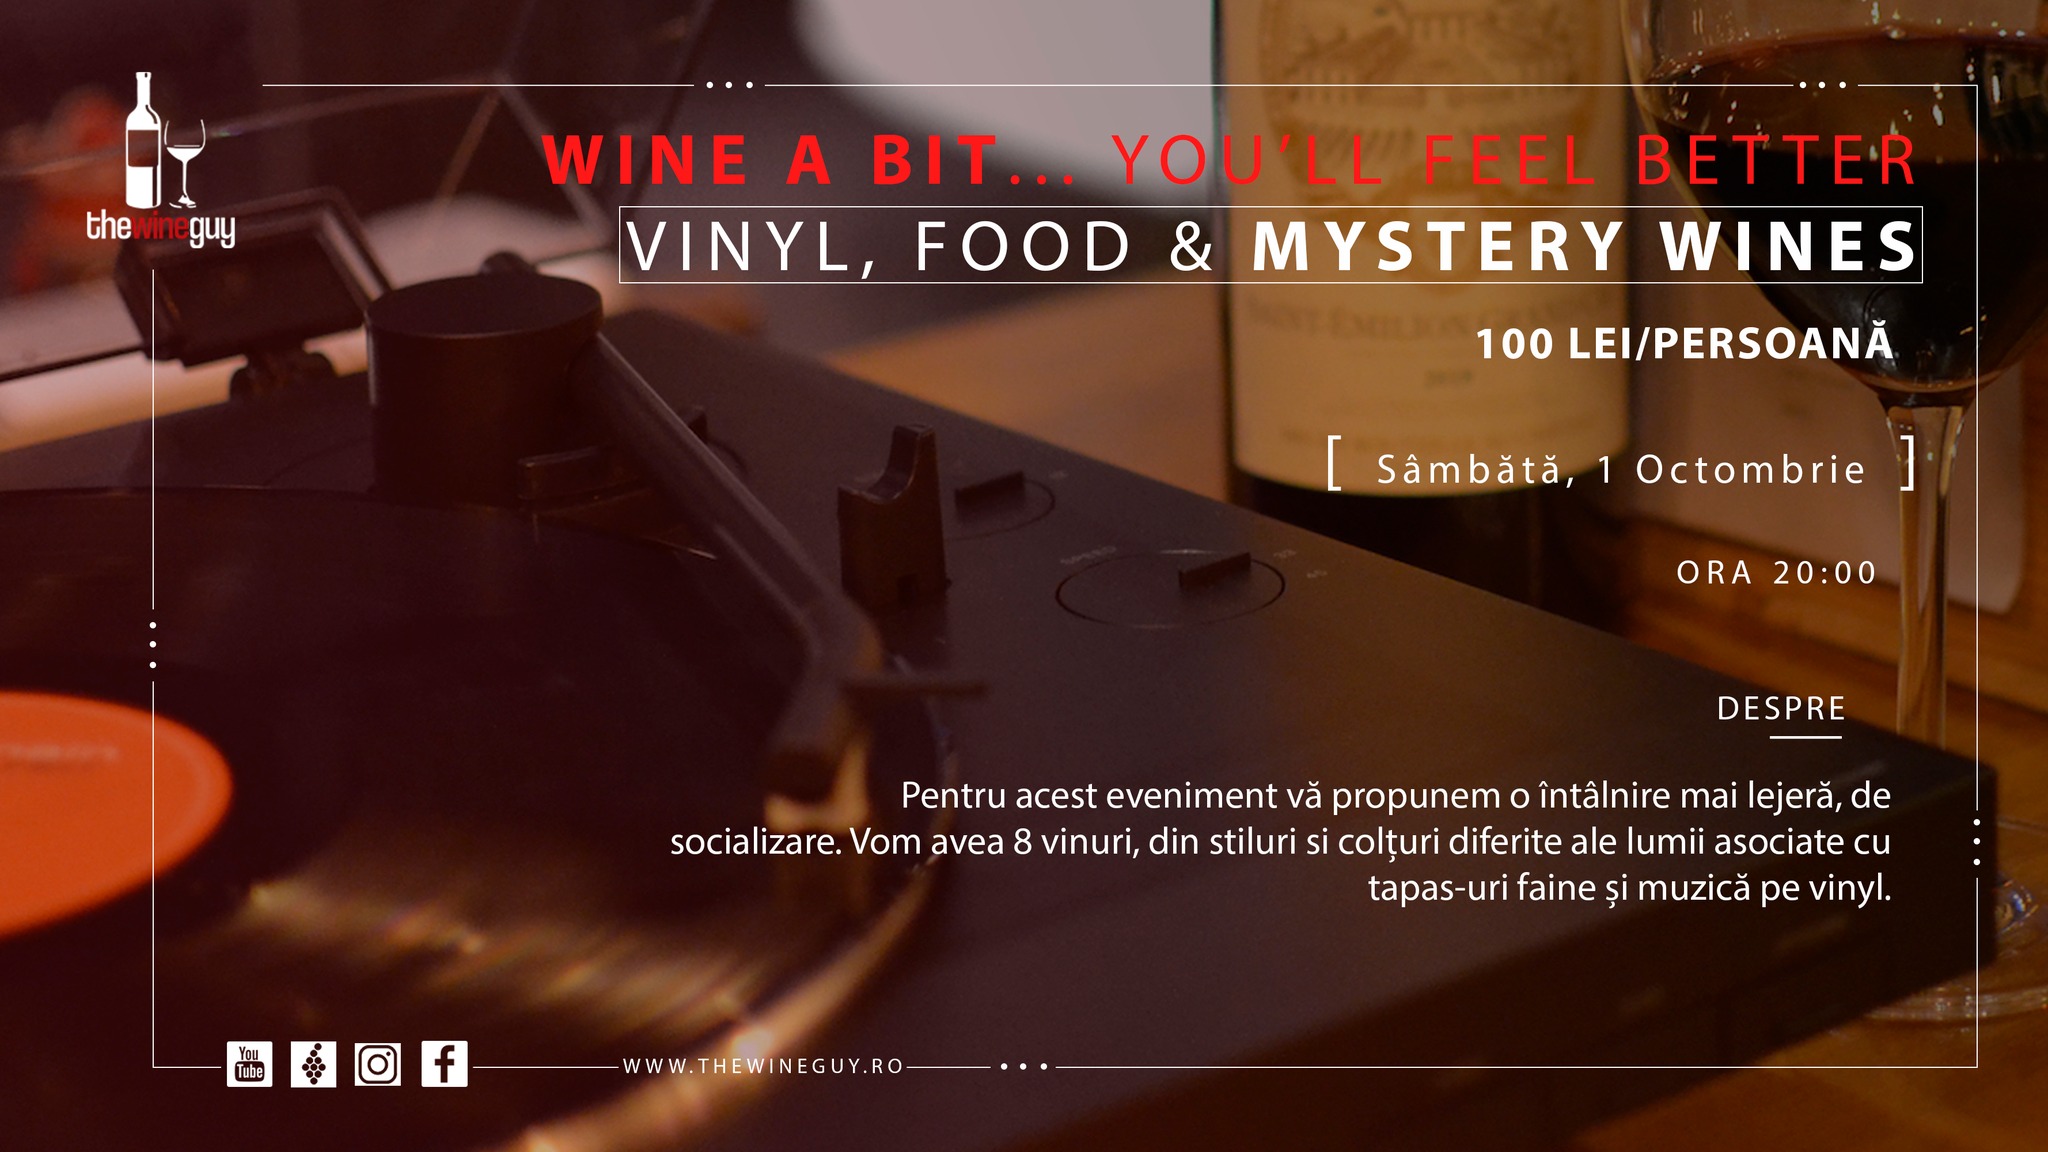 Wine a Bit... Vinyl, Food & Mystery Wines (Timisoara)